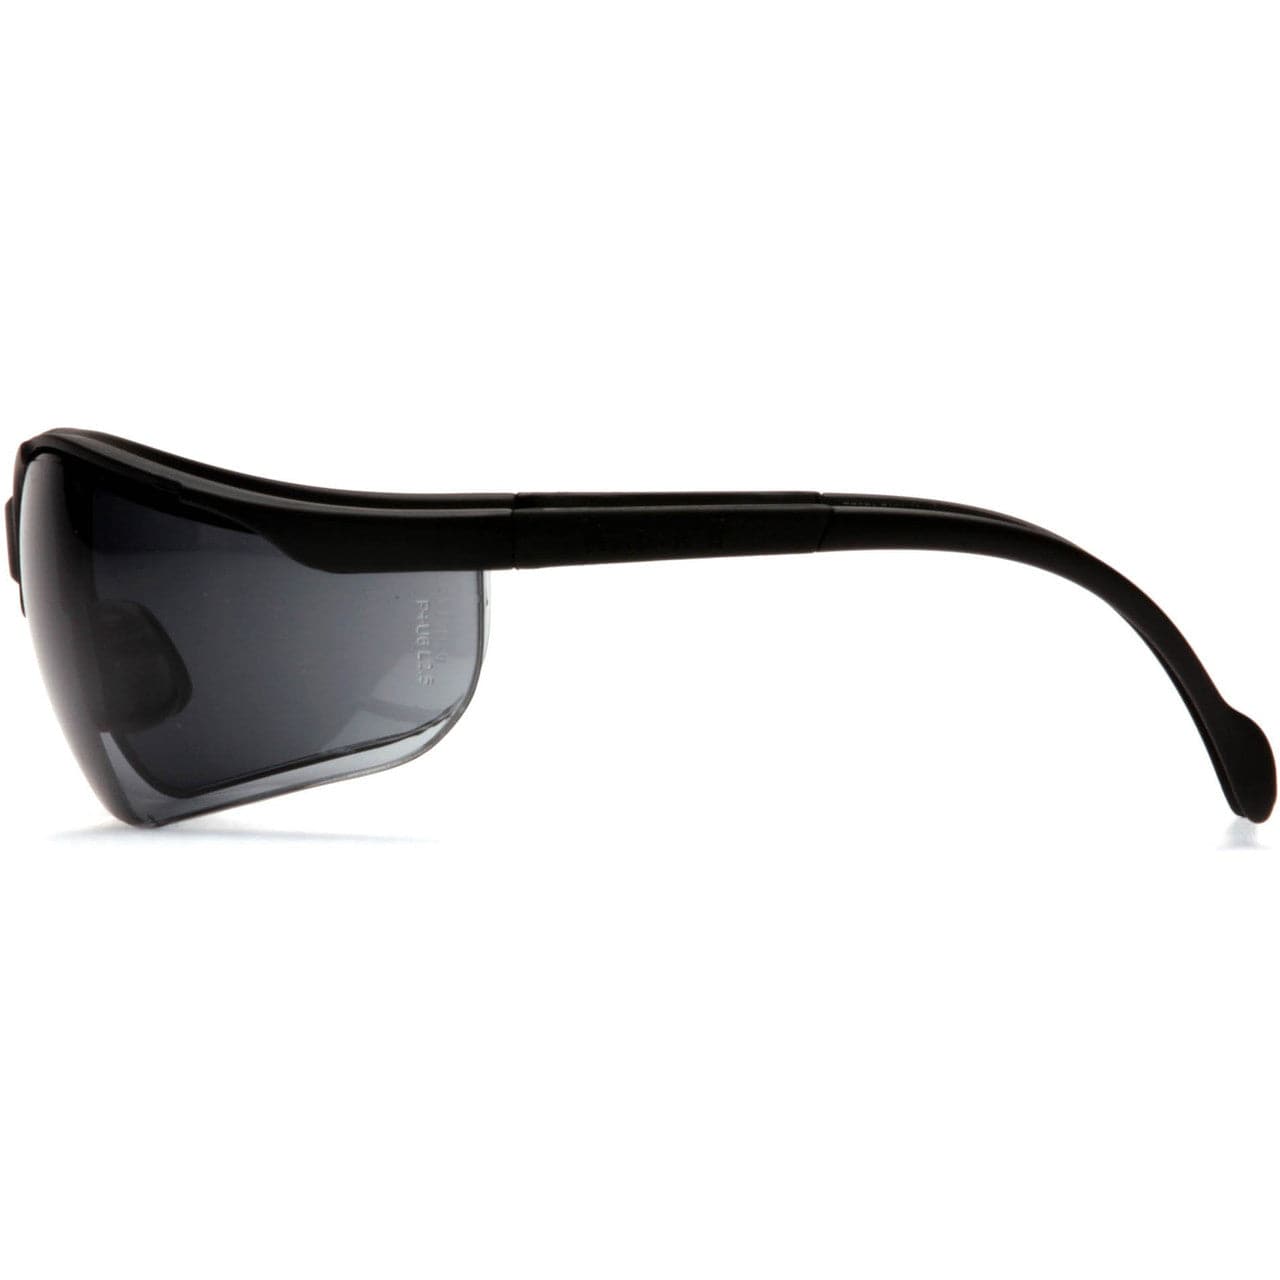 Pyramex Venture 2 Safety Glasses Black Frame Gray Lens SB1820S Side View